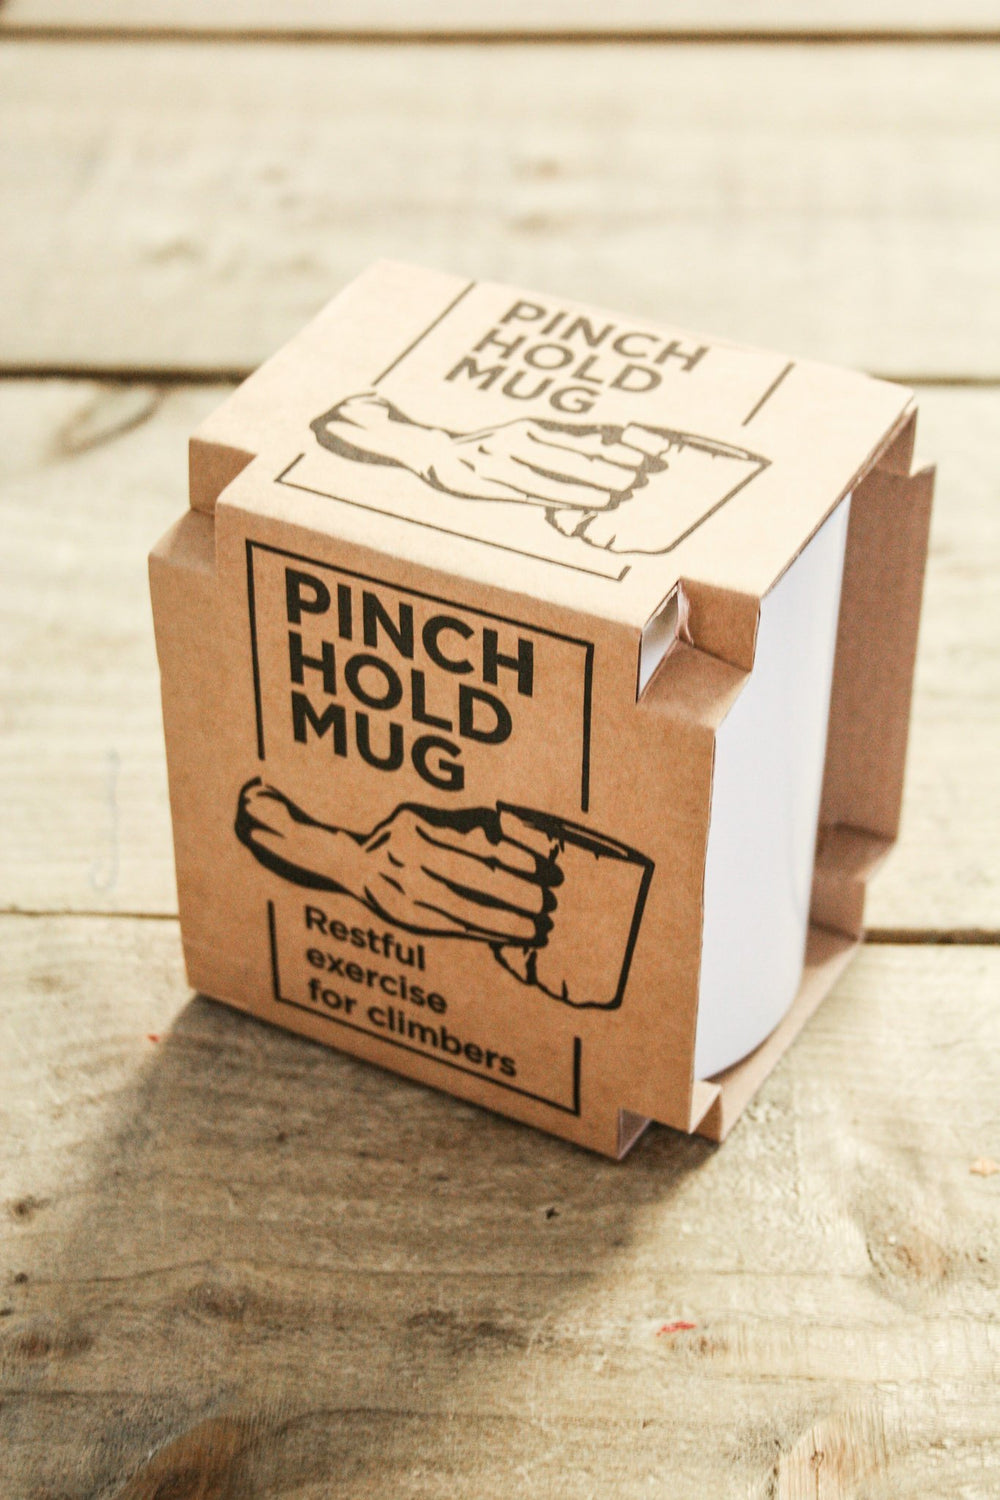 Pinch Hold Mug - Limited Bone China Edition